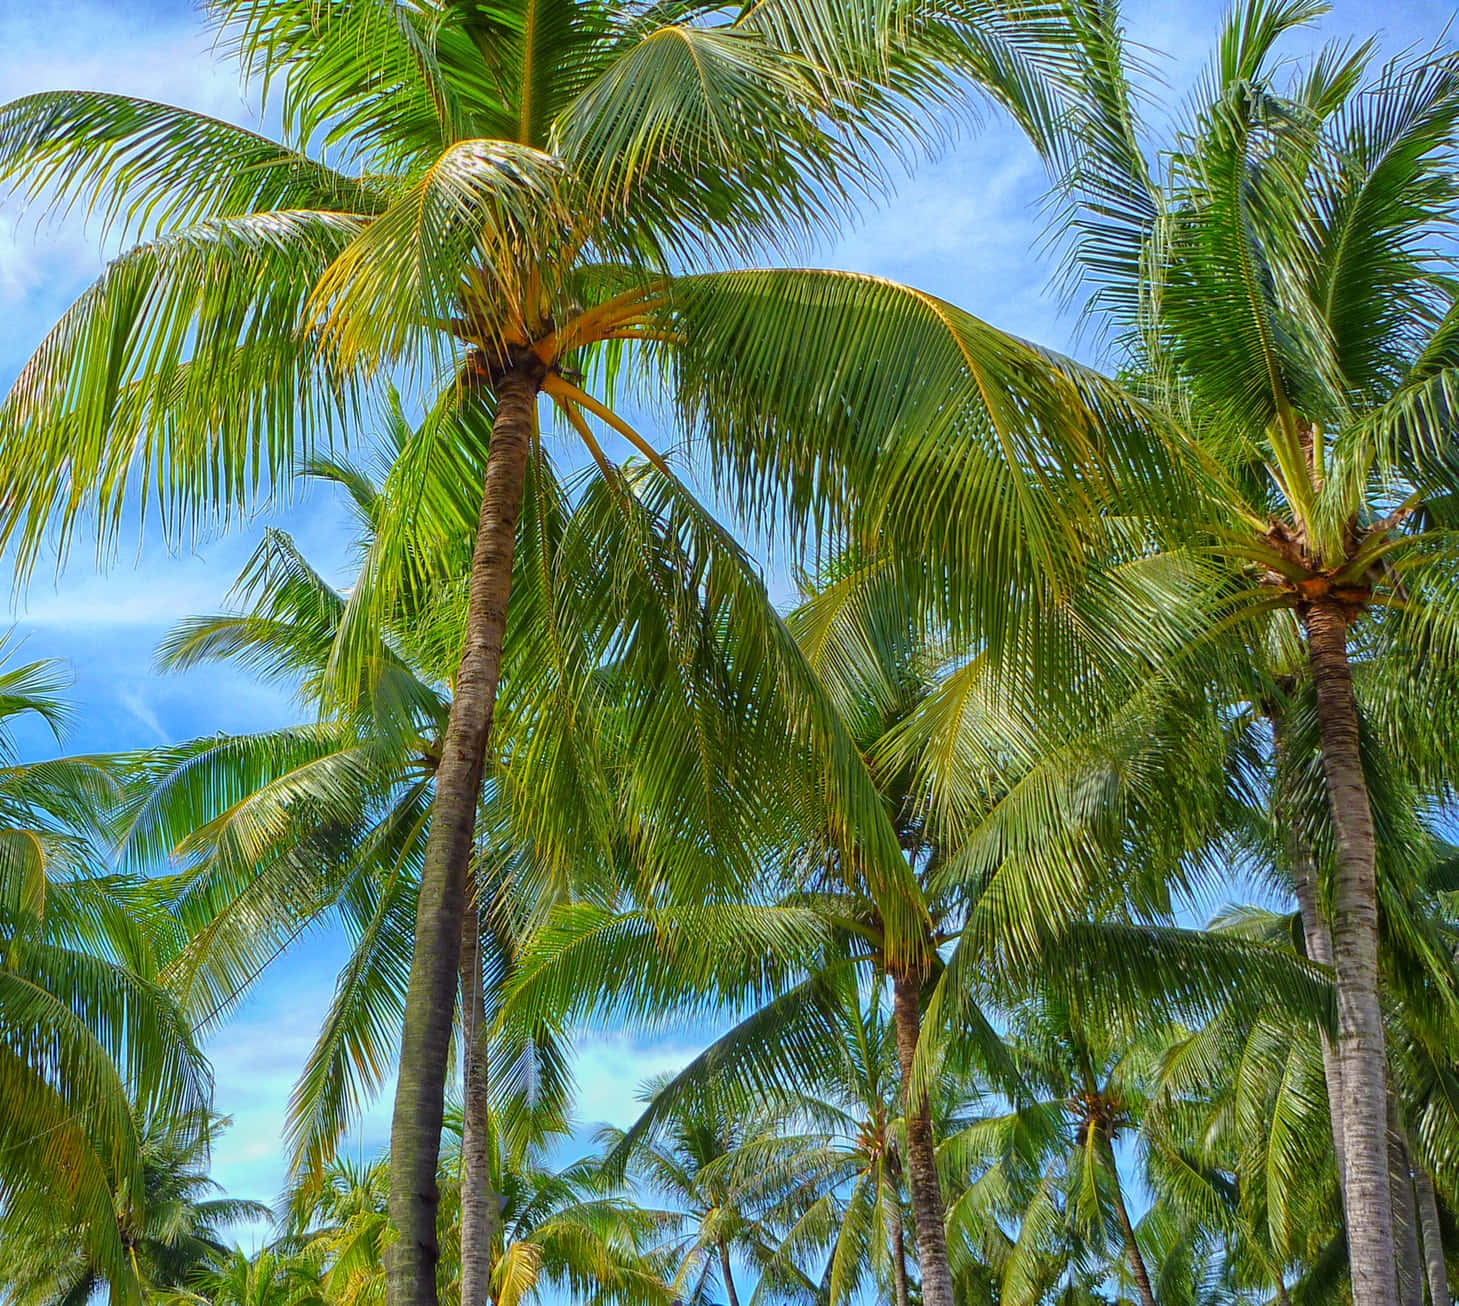 Enjoying a beautiful Coconut Tree in the sun